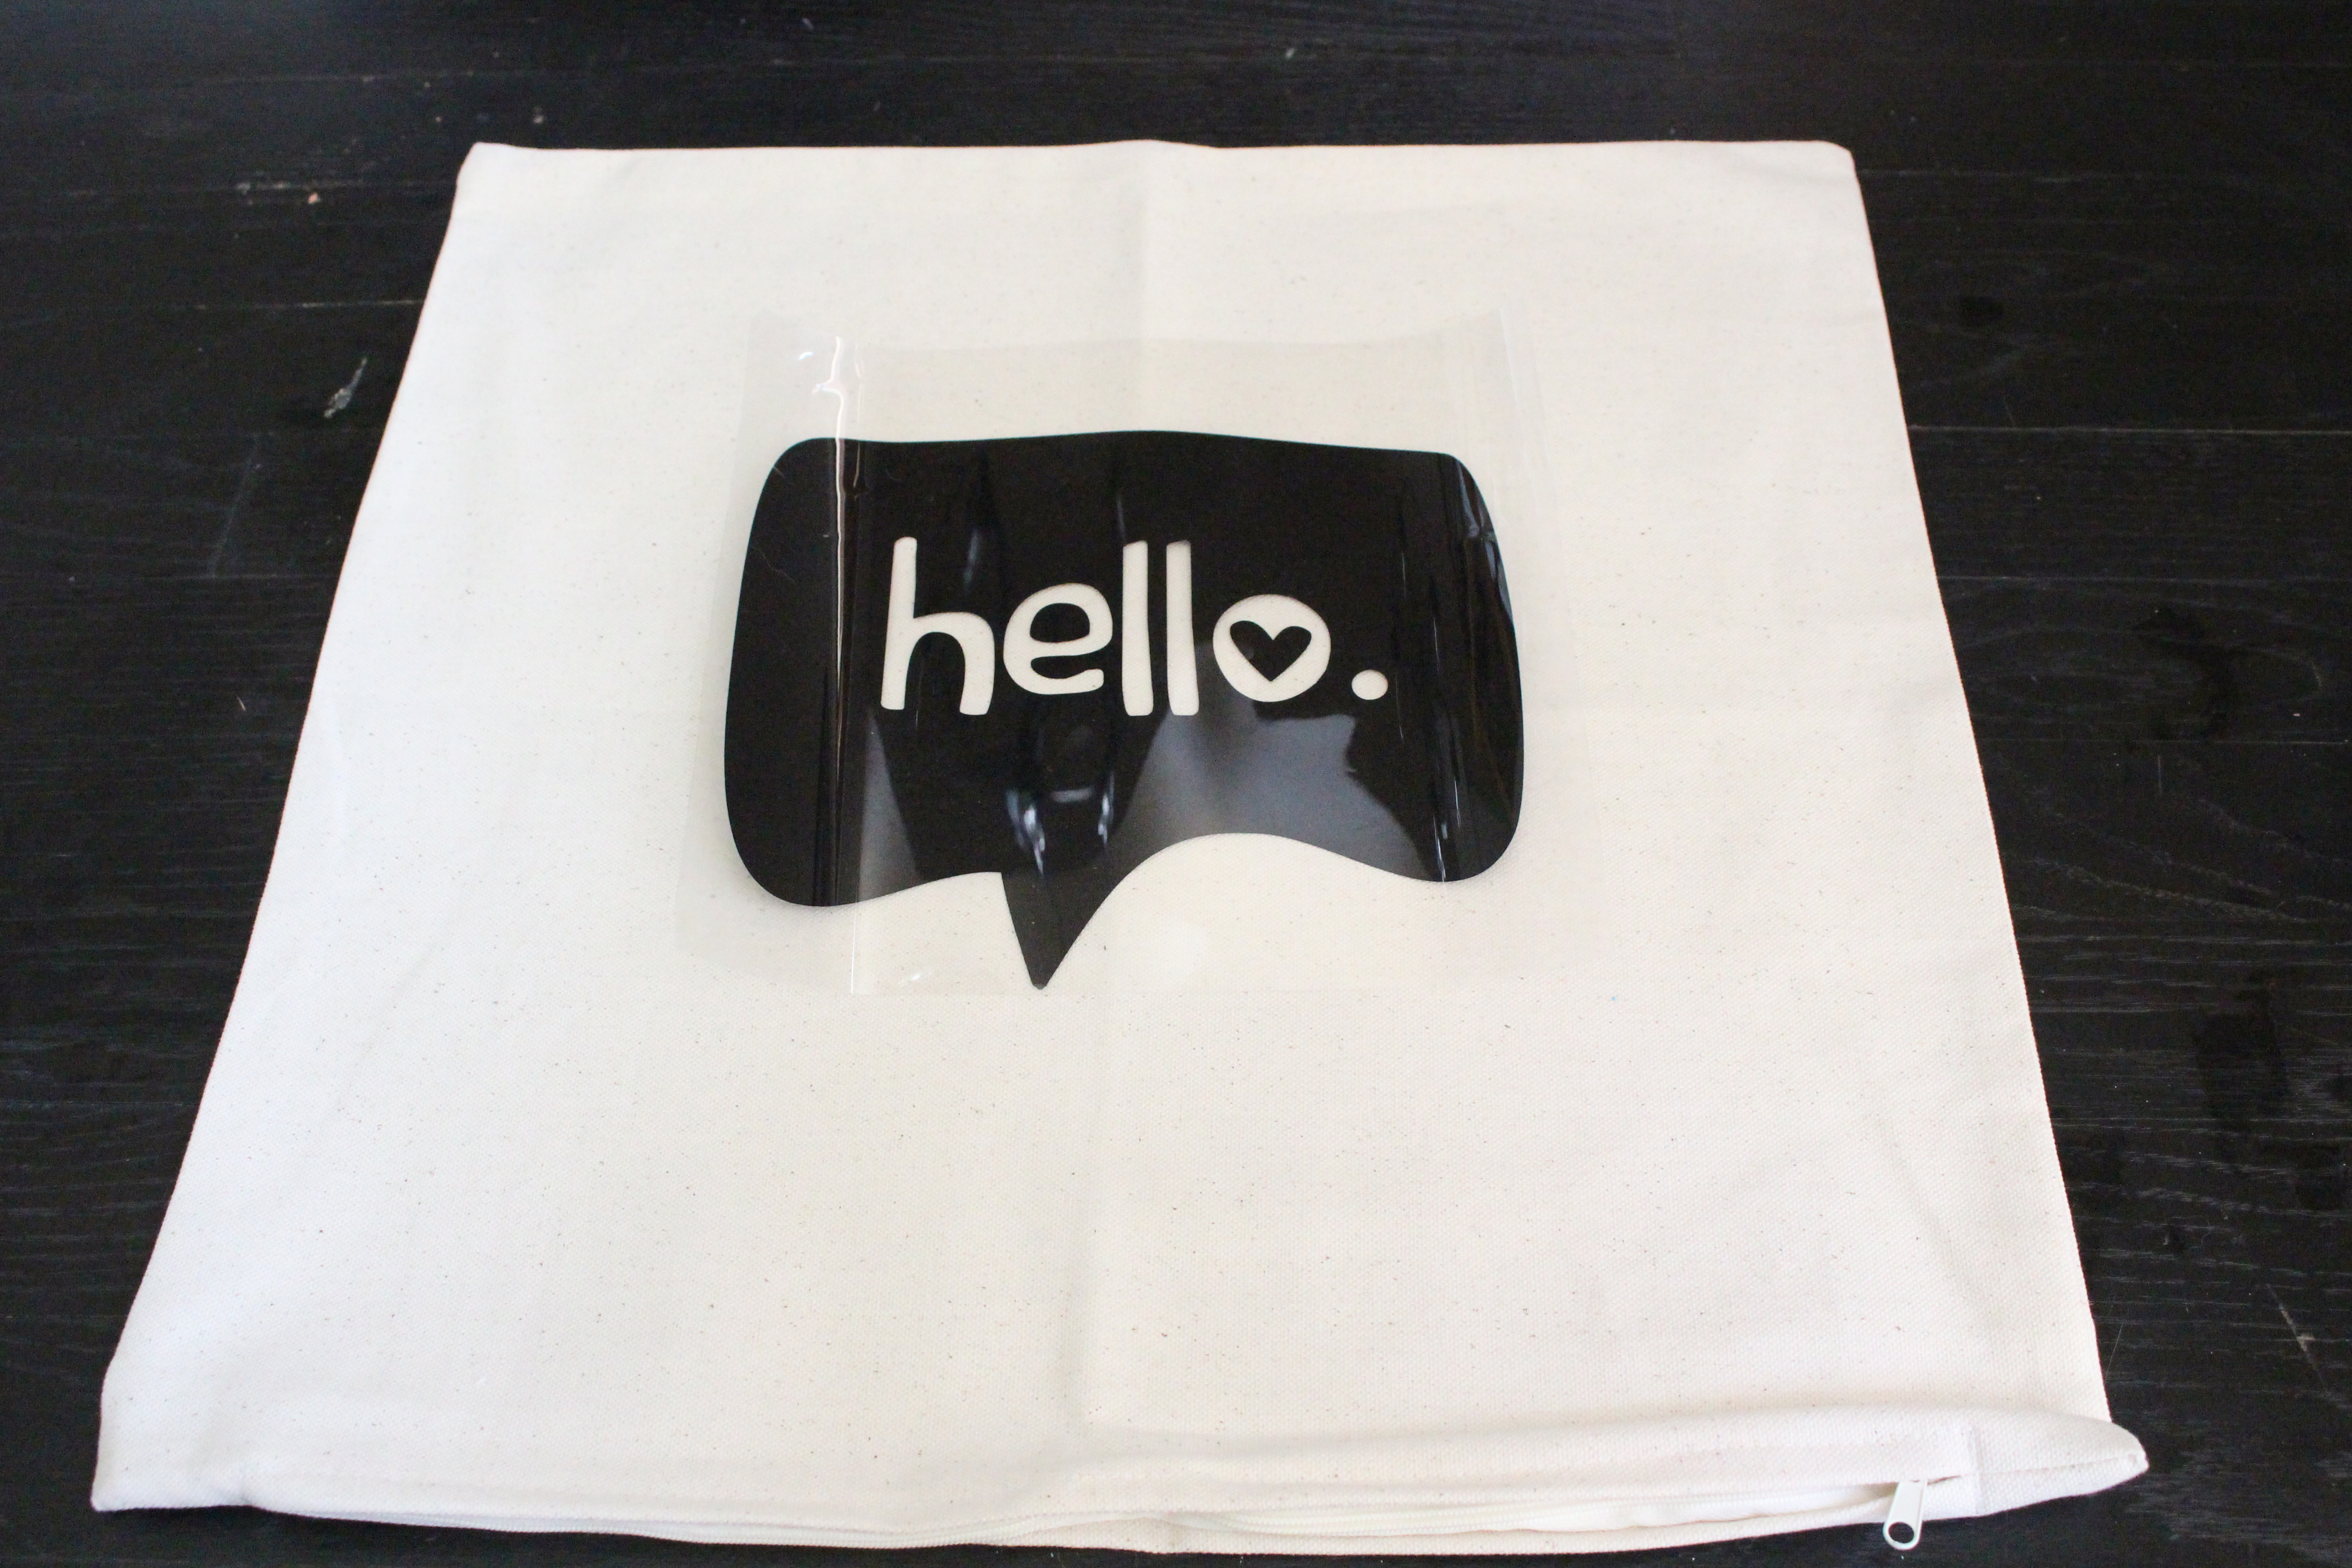 Silhouette Cameo Vinyl Heat Transfer Pillow Cover project | Silhouette projects | Silhouette Cameo | vinyl | DIY pillow cover | decor | pillows